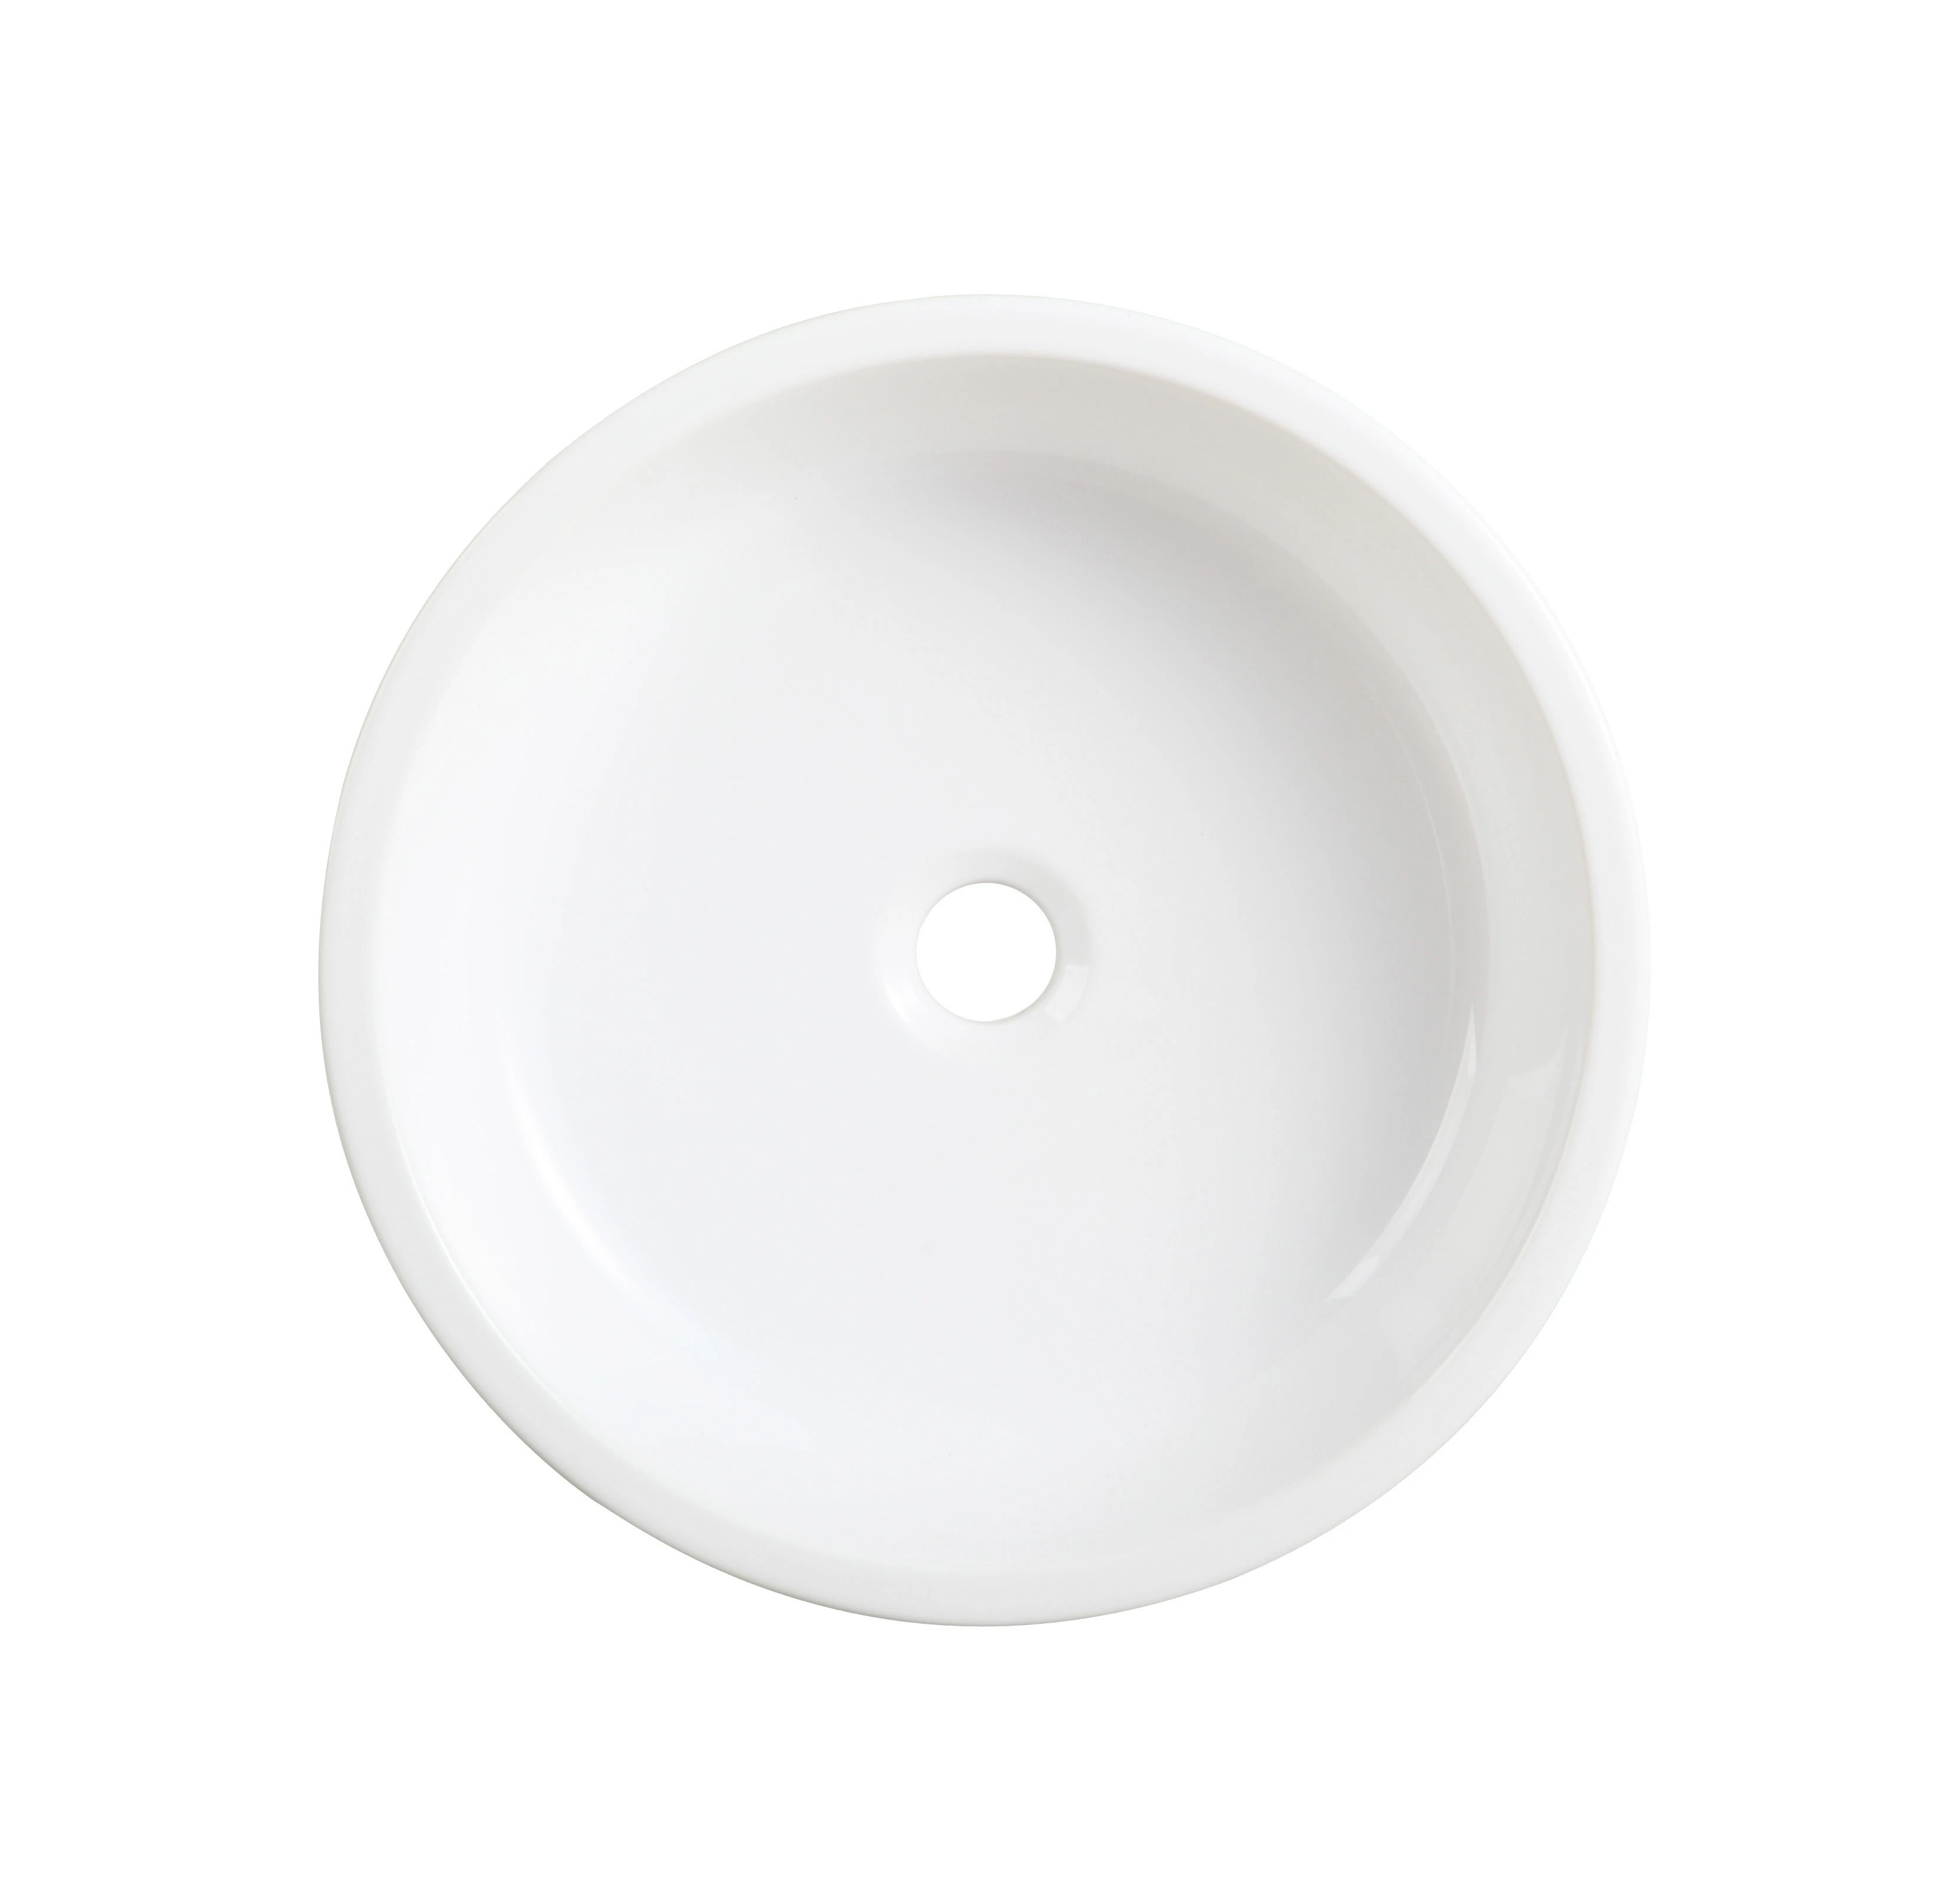 TX-1131A art basin sink types/Round porcelain free standing bathroom sink